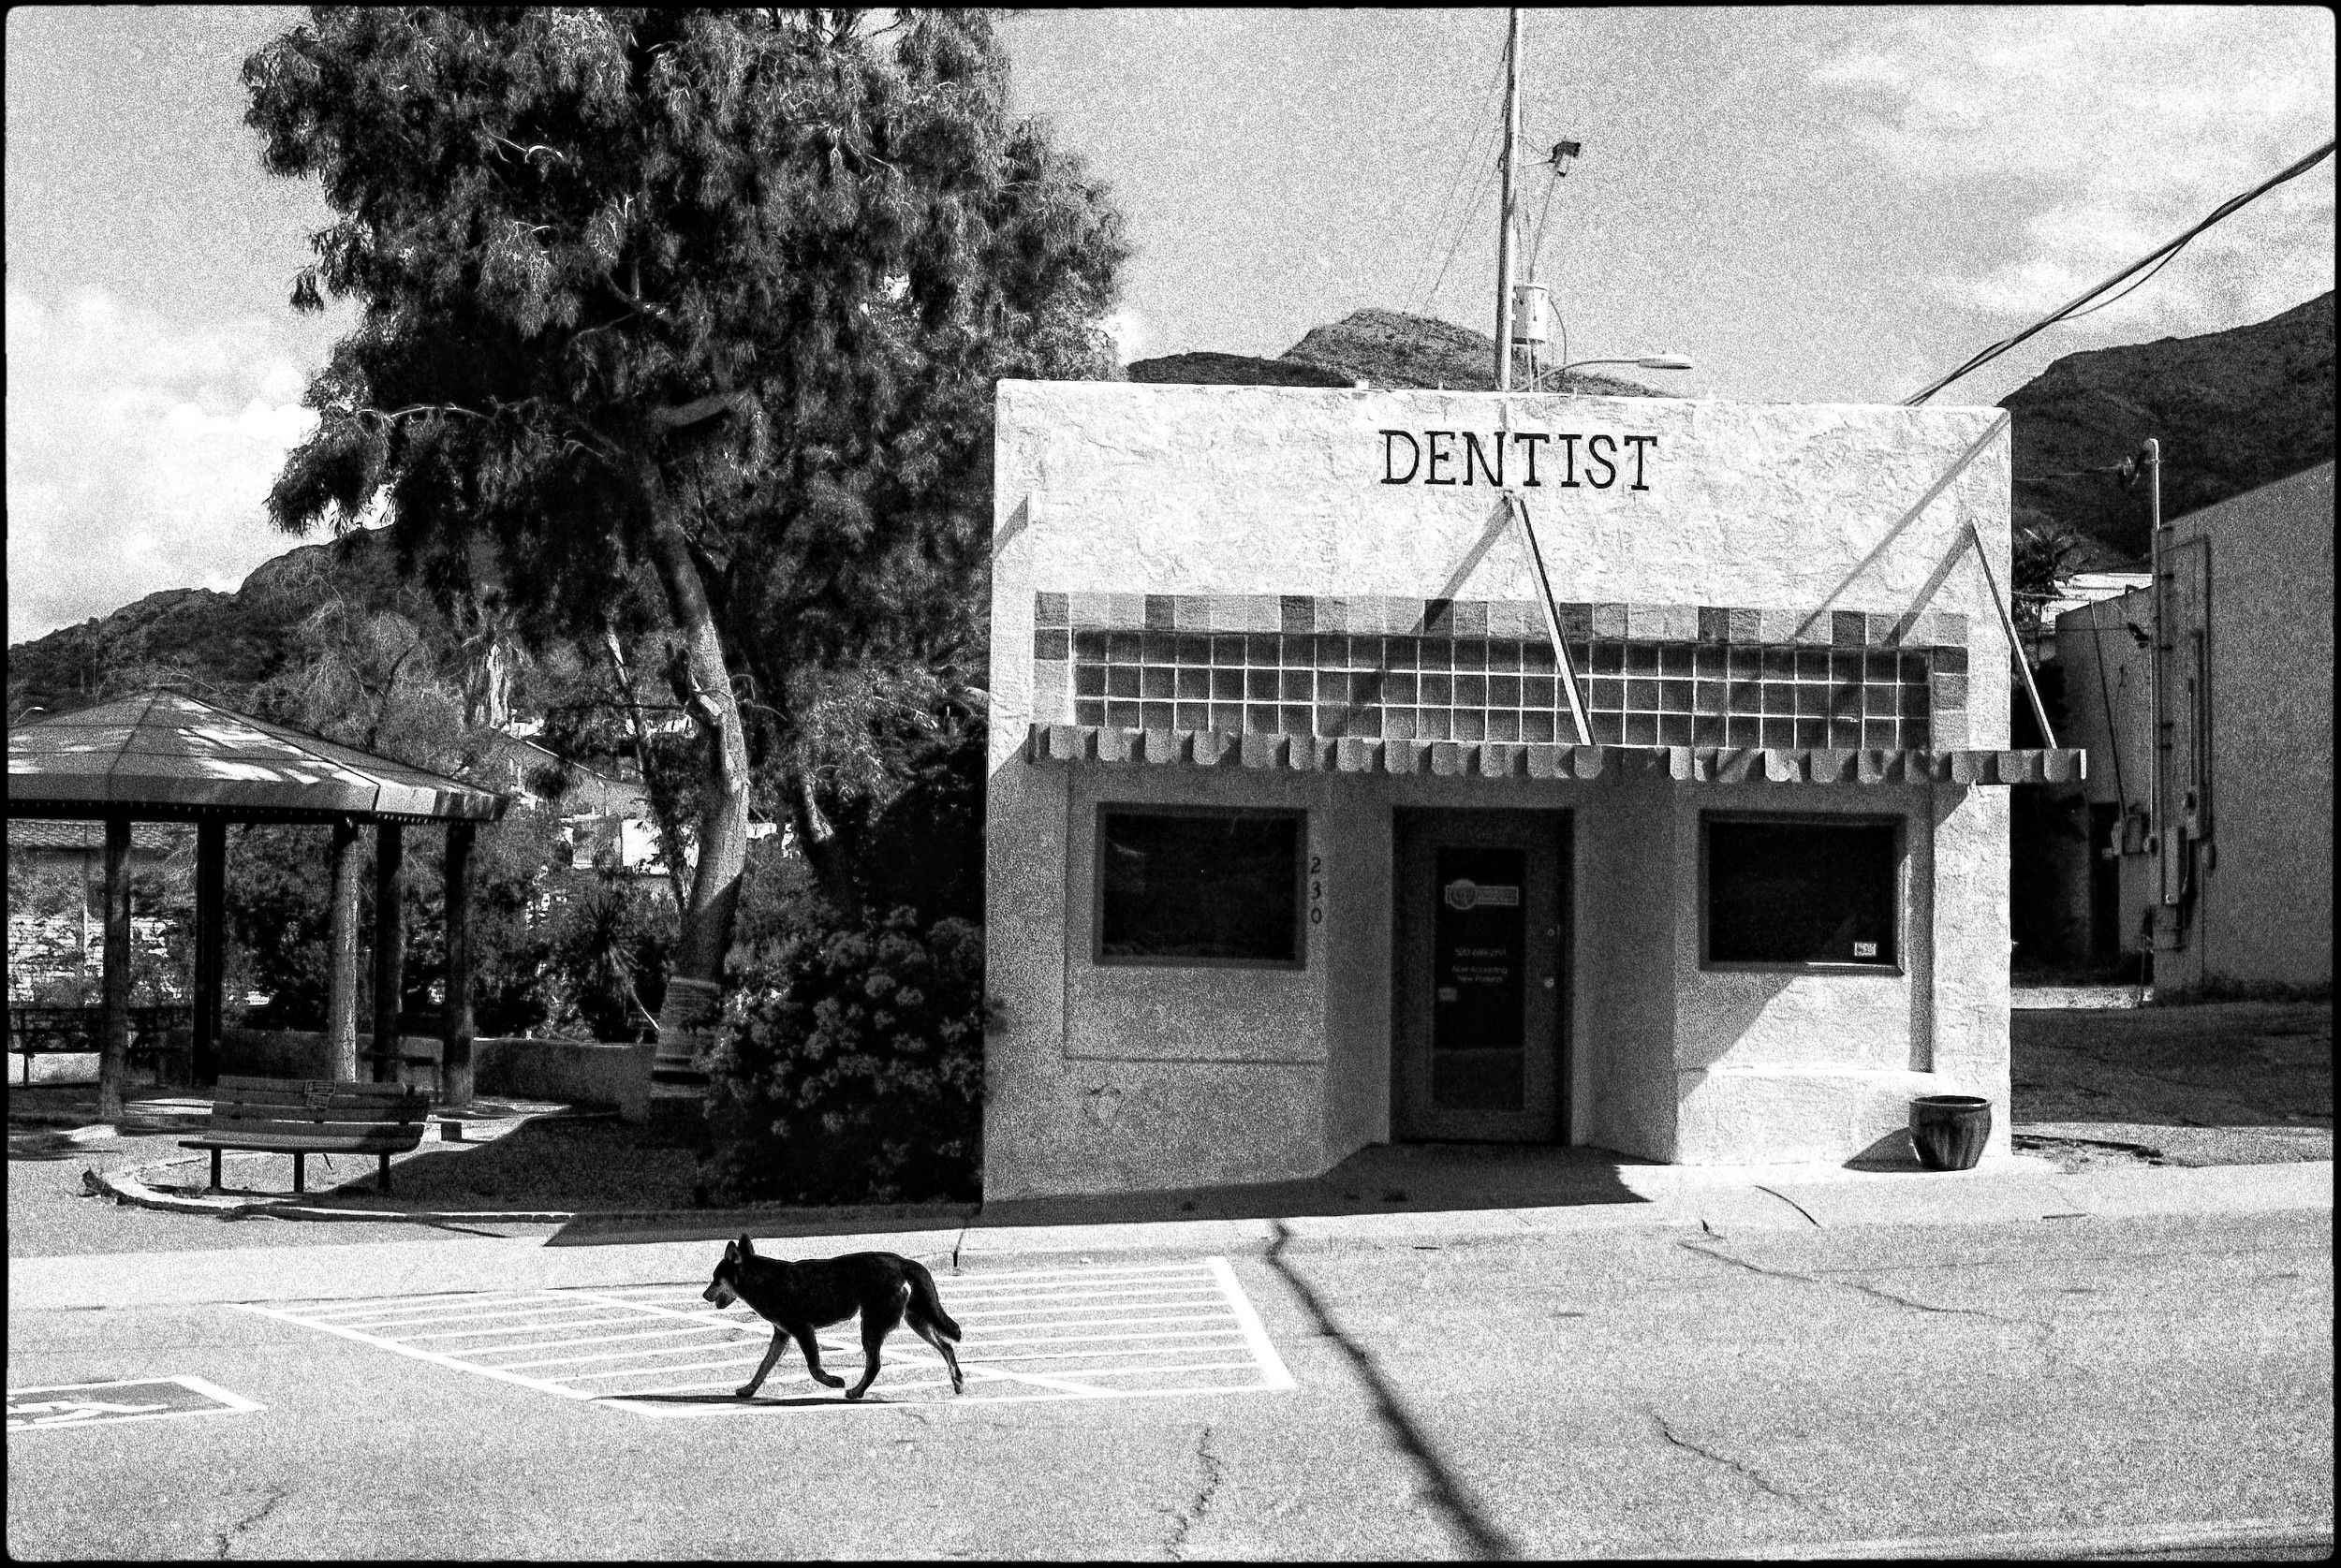 Dog & Dentist II